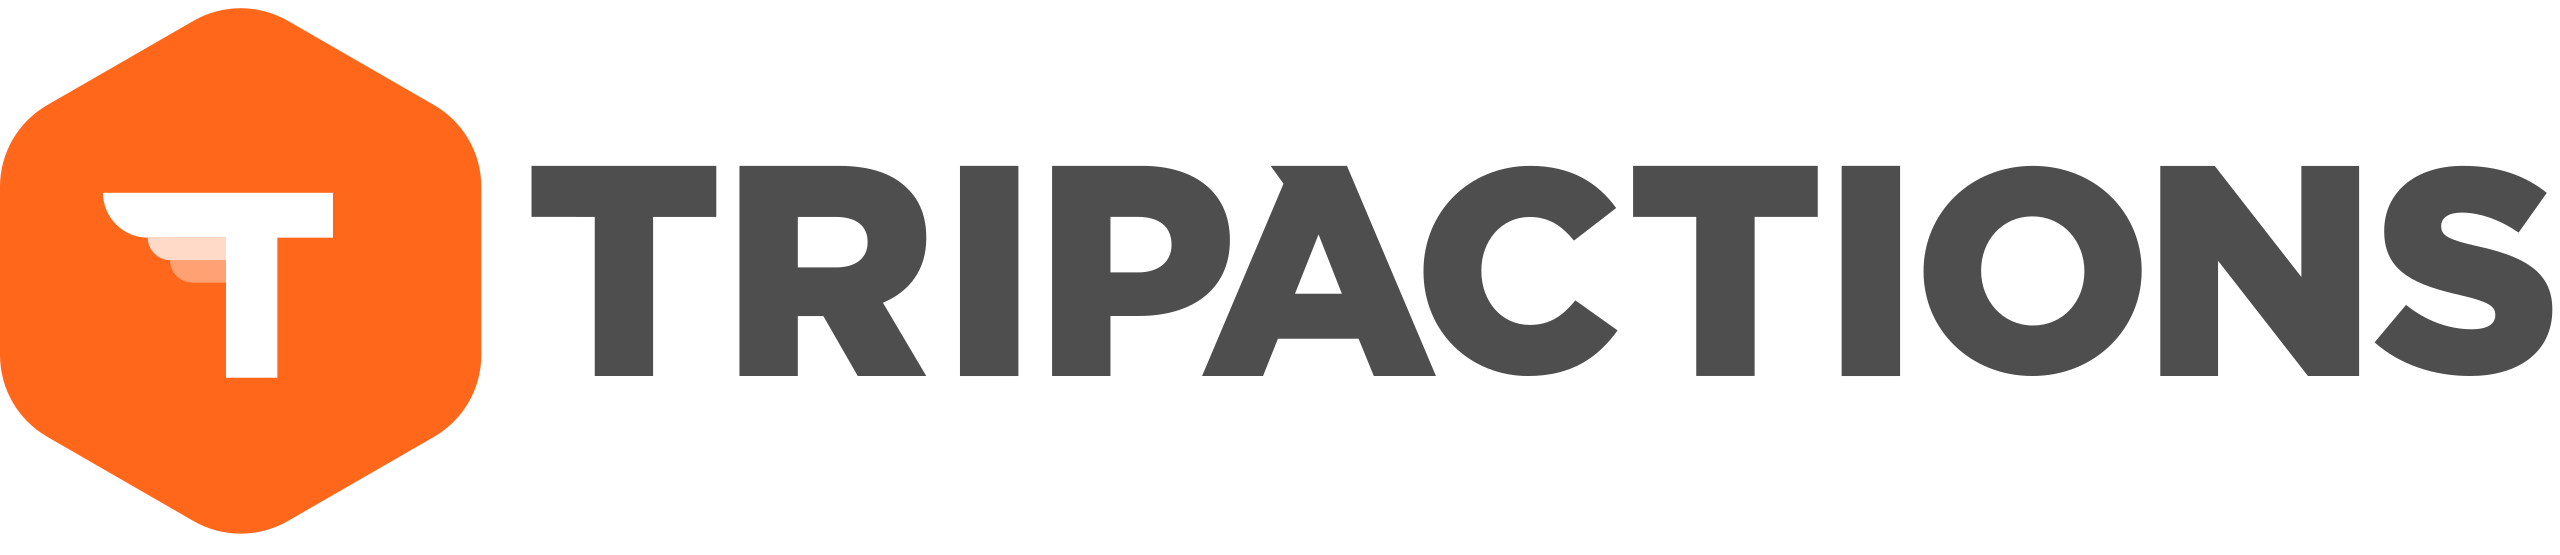 TripActions_logo